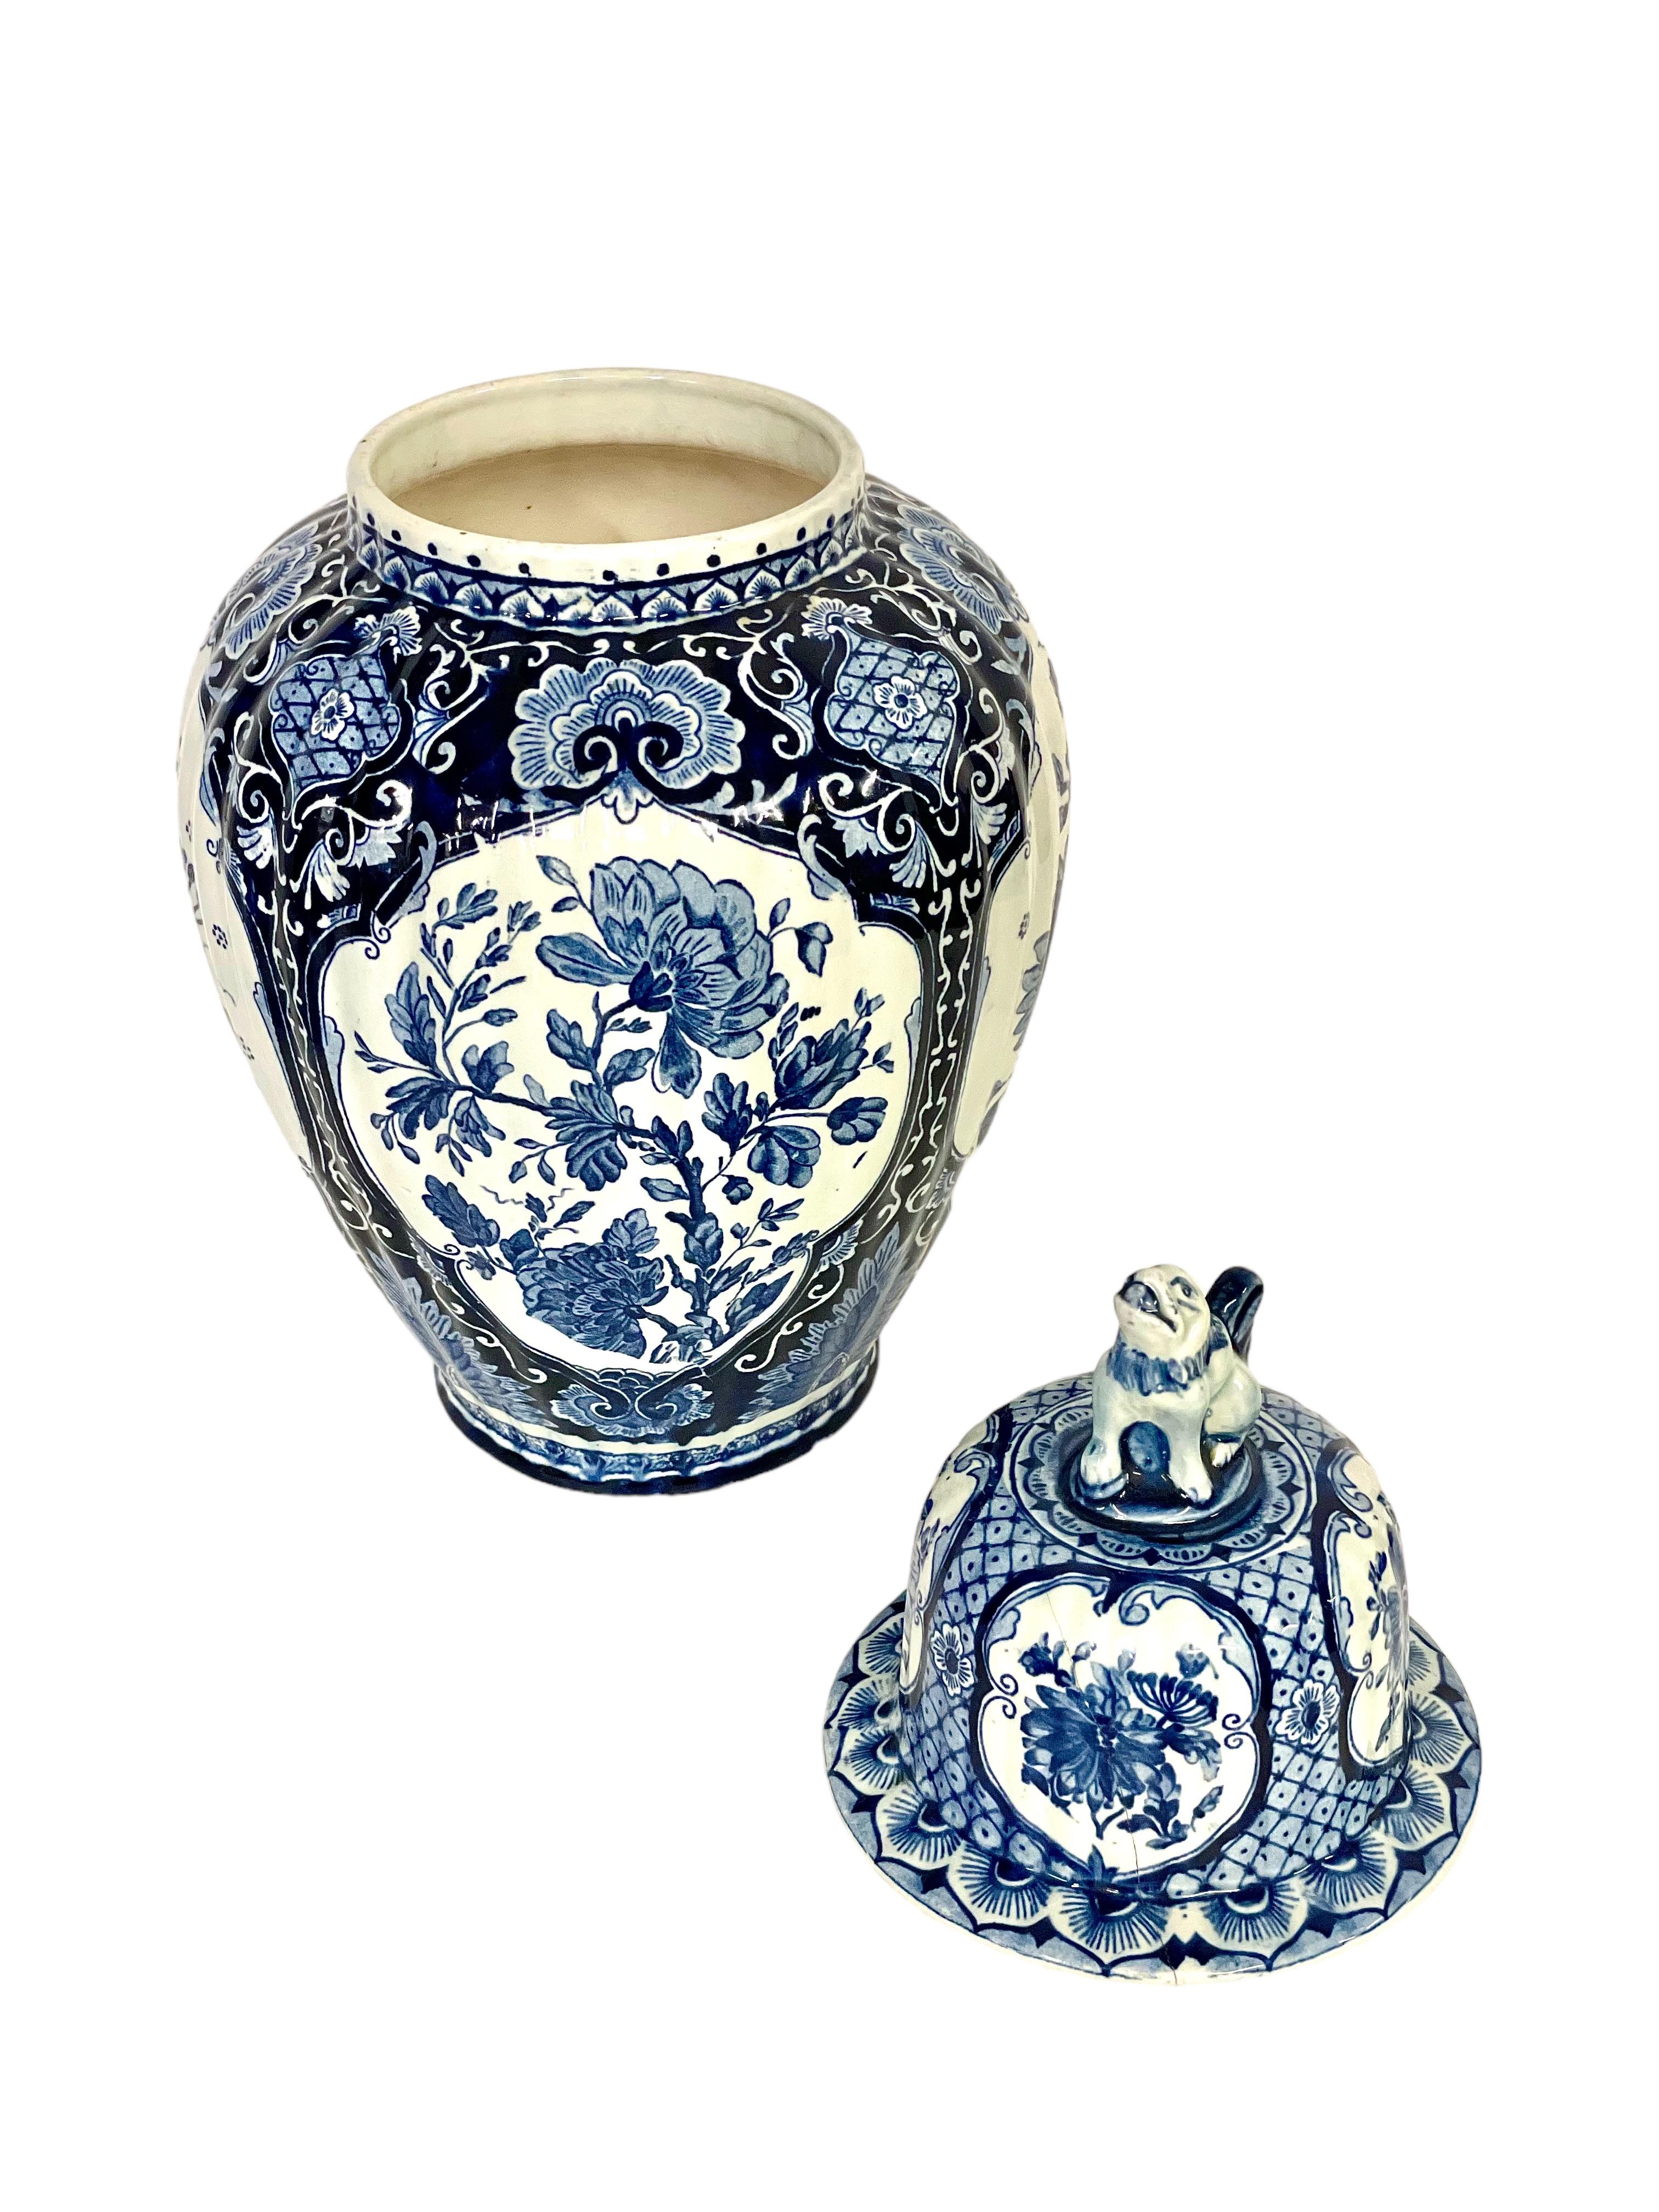 Blue and White Delft Large Lidded Baluster Vase  For Sale 6